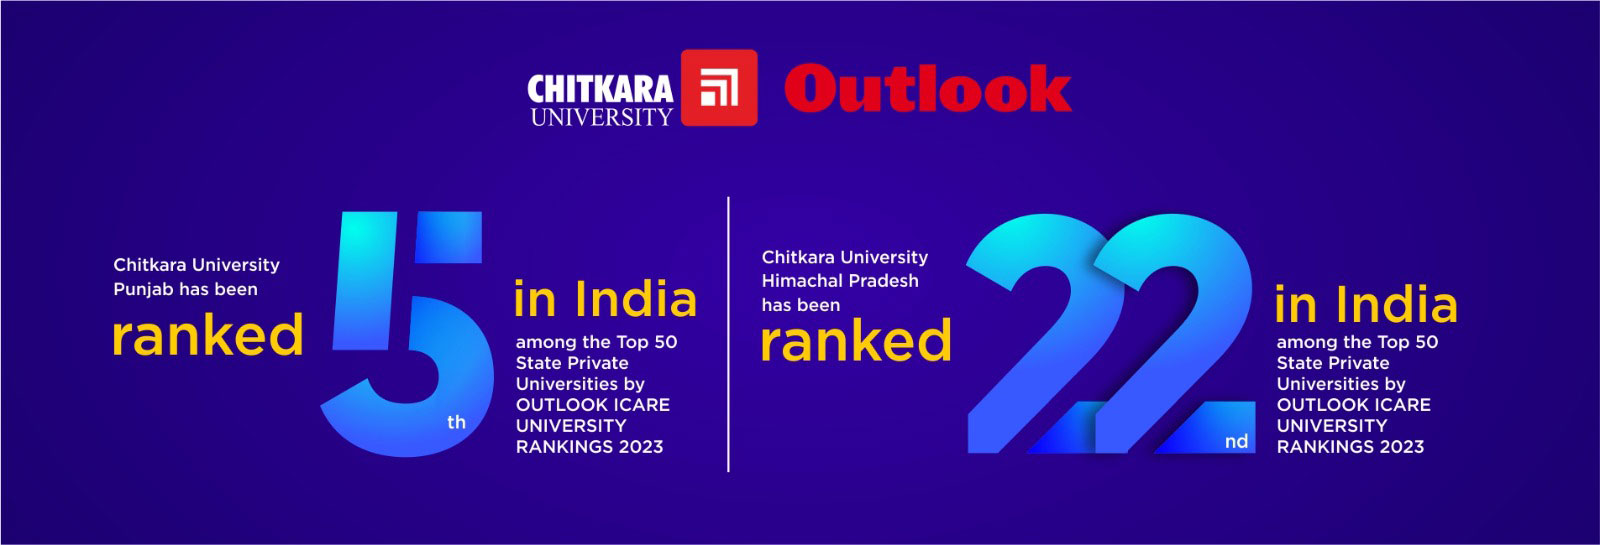 ICARE India Rankings 2023 - -Chitkara University